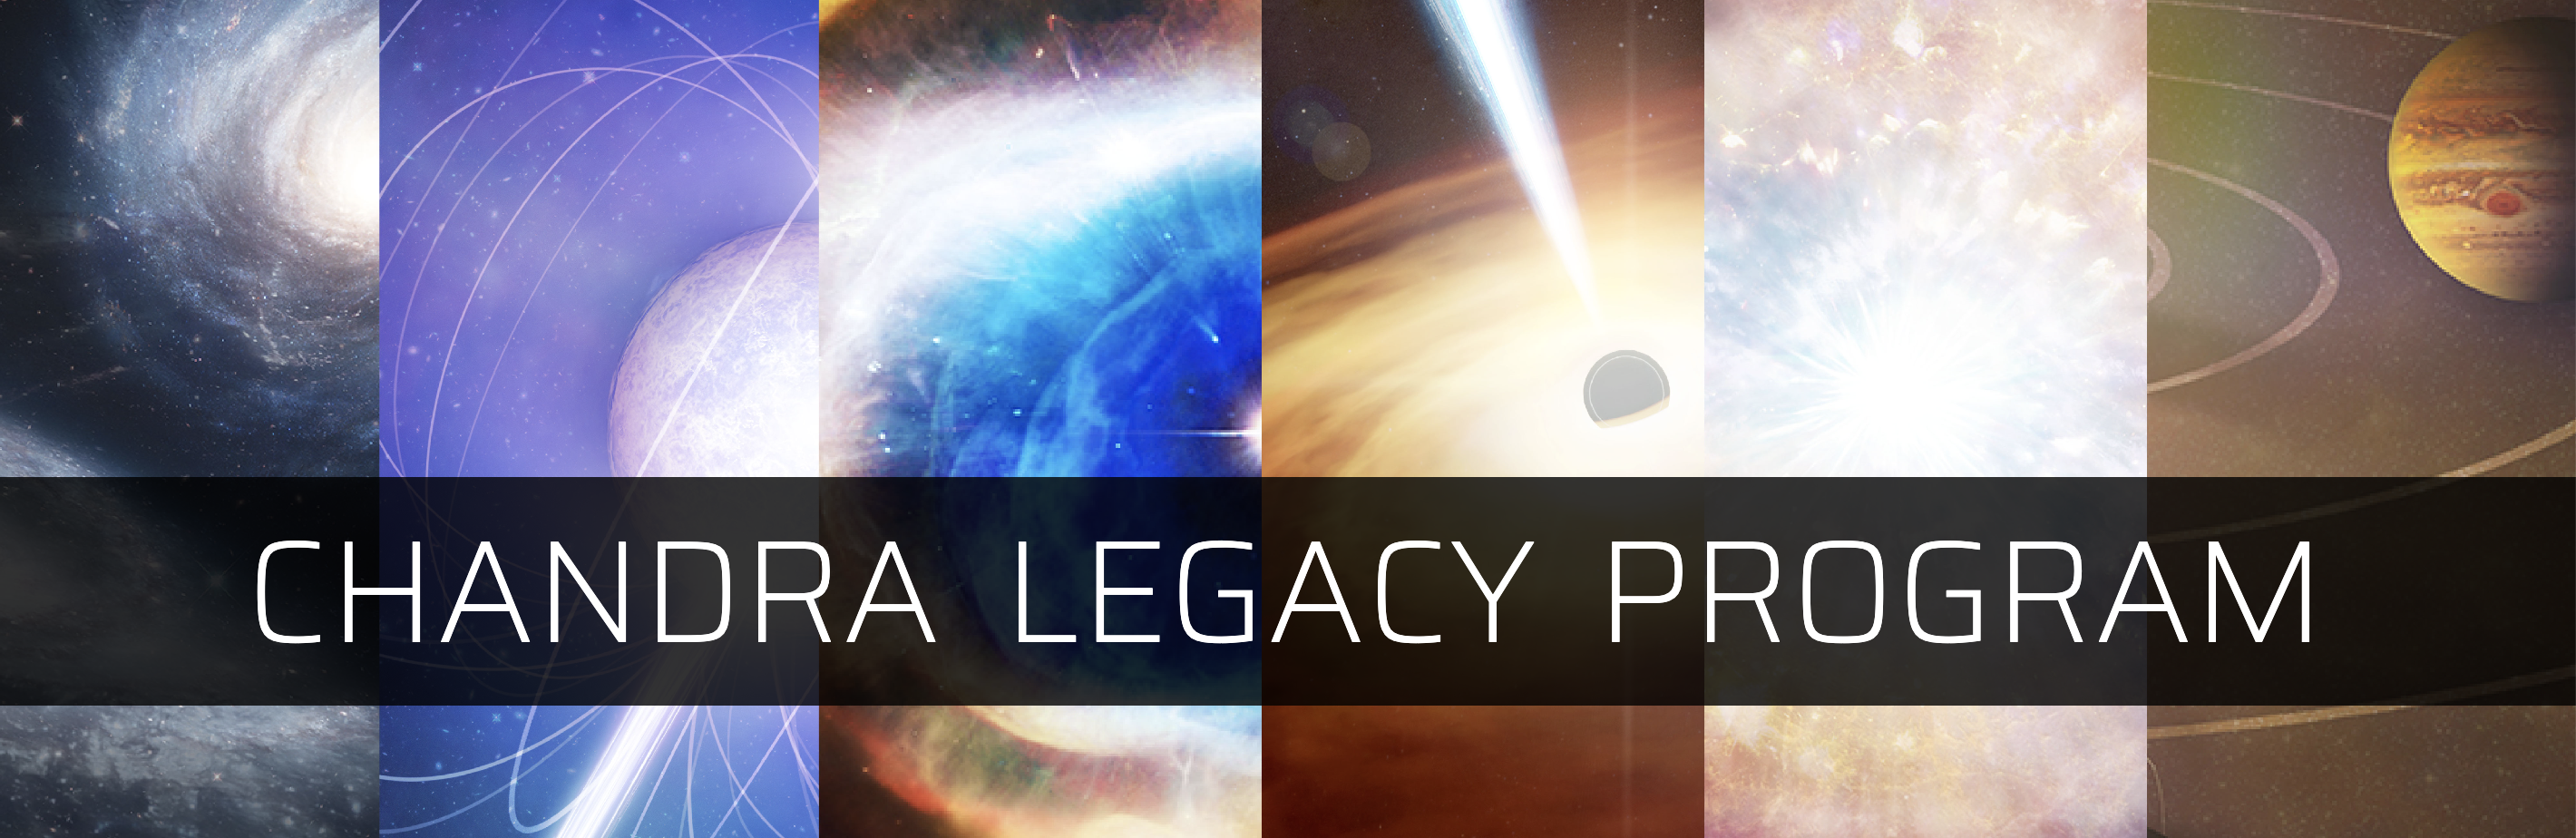 Chandra Legacy Program